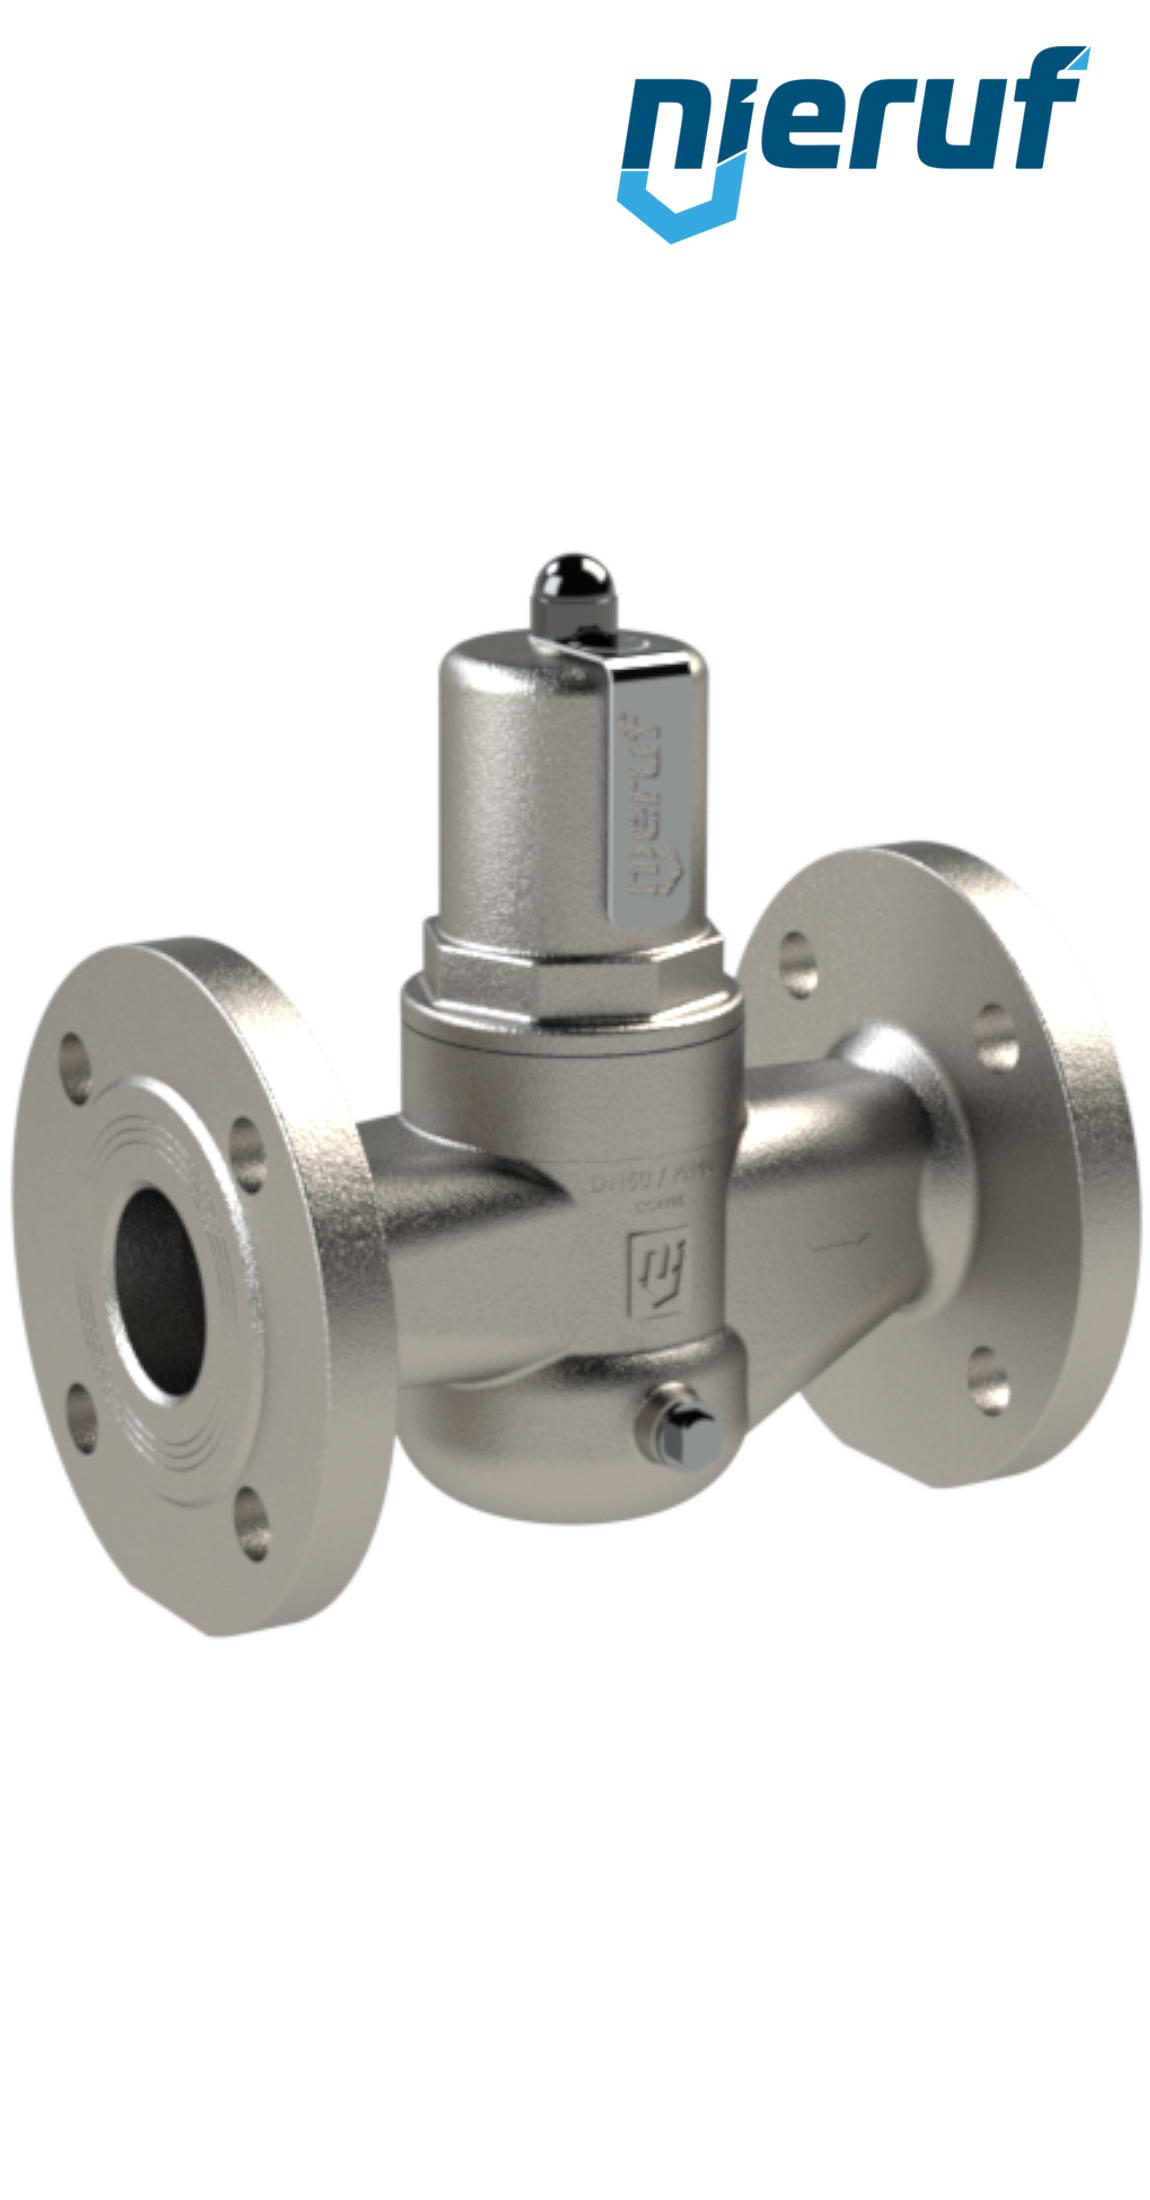 Flange-pressure reducing valve DN 25 PN40 DM08 stainless steel FKM 0.5 - 2.0 bar